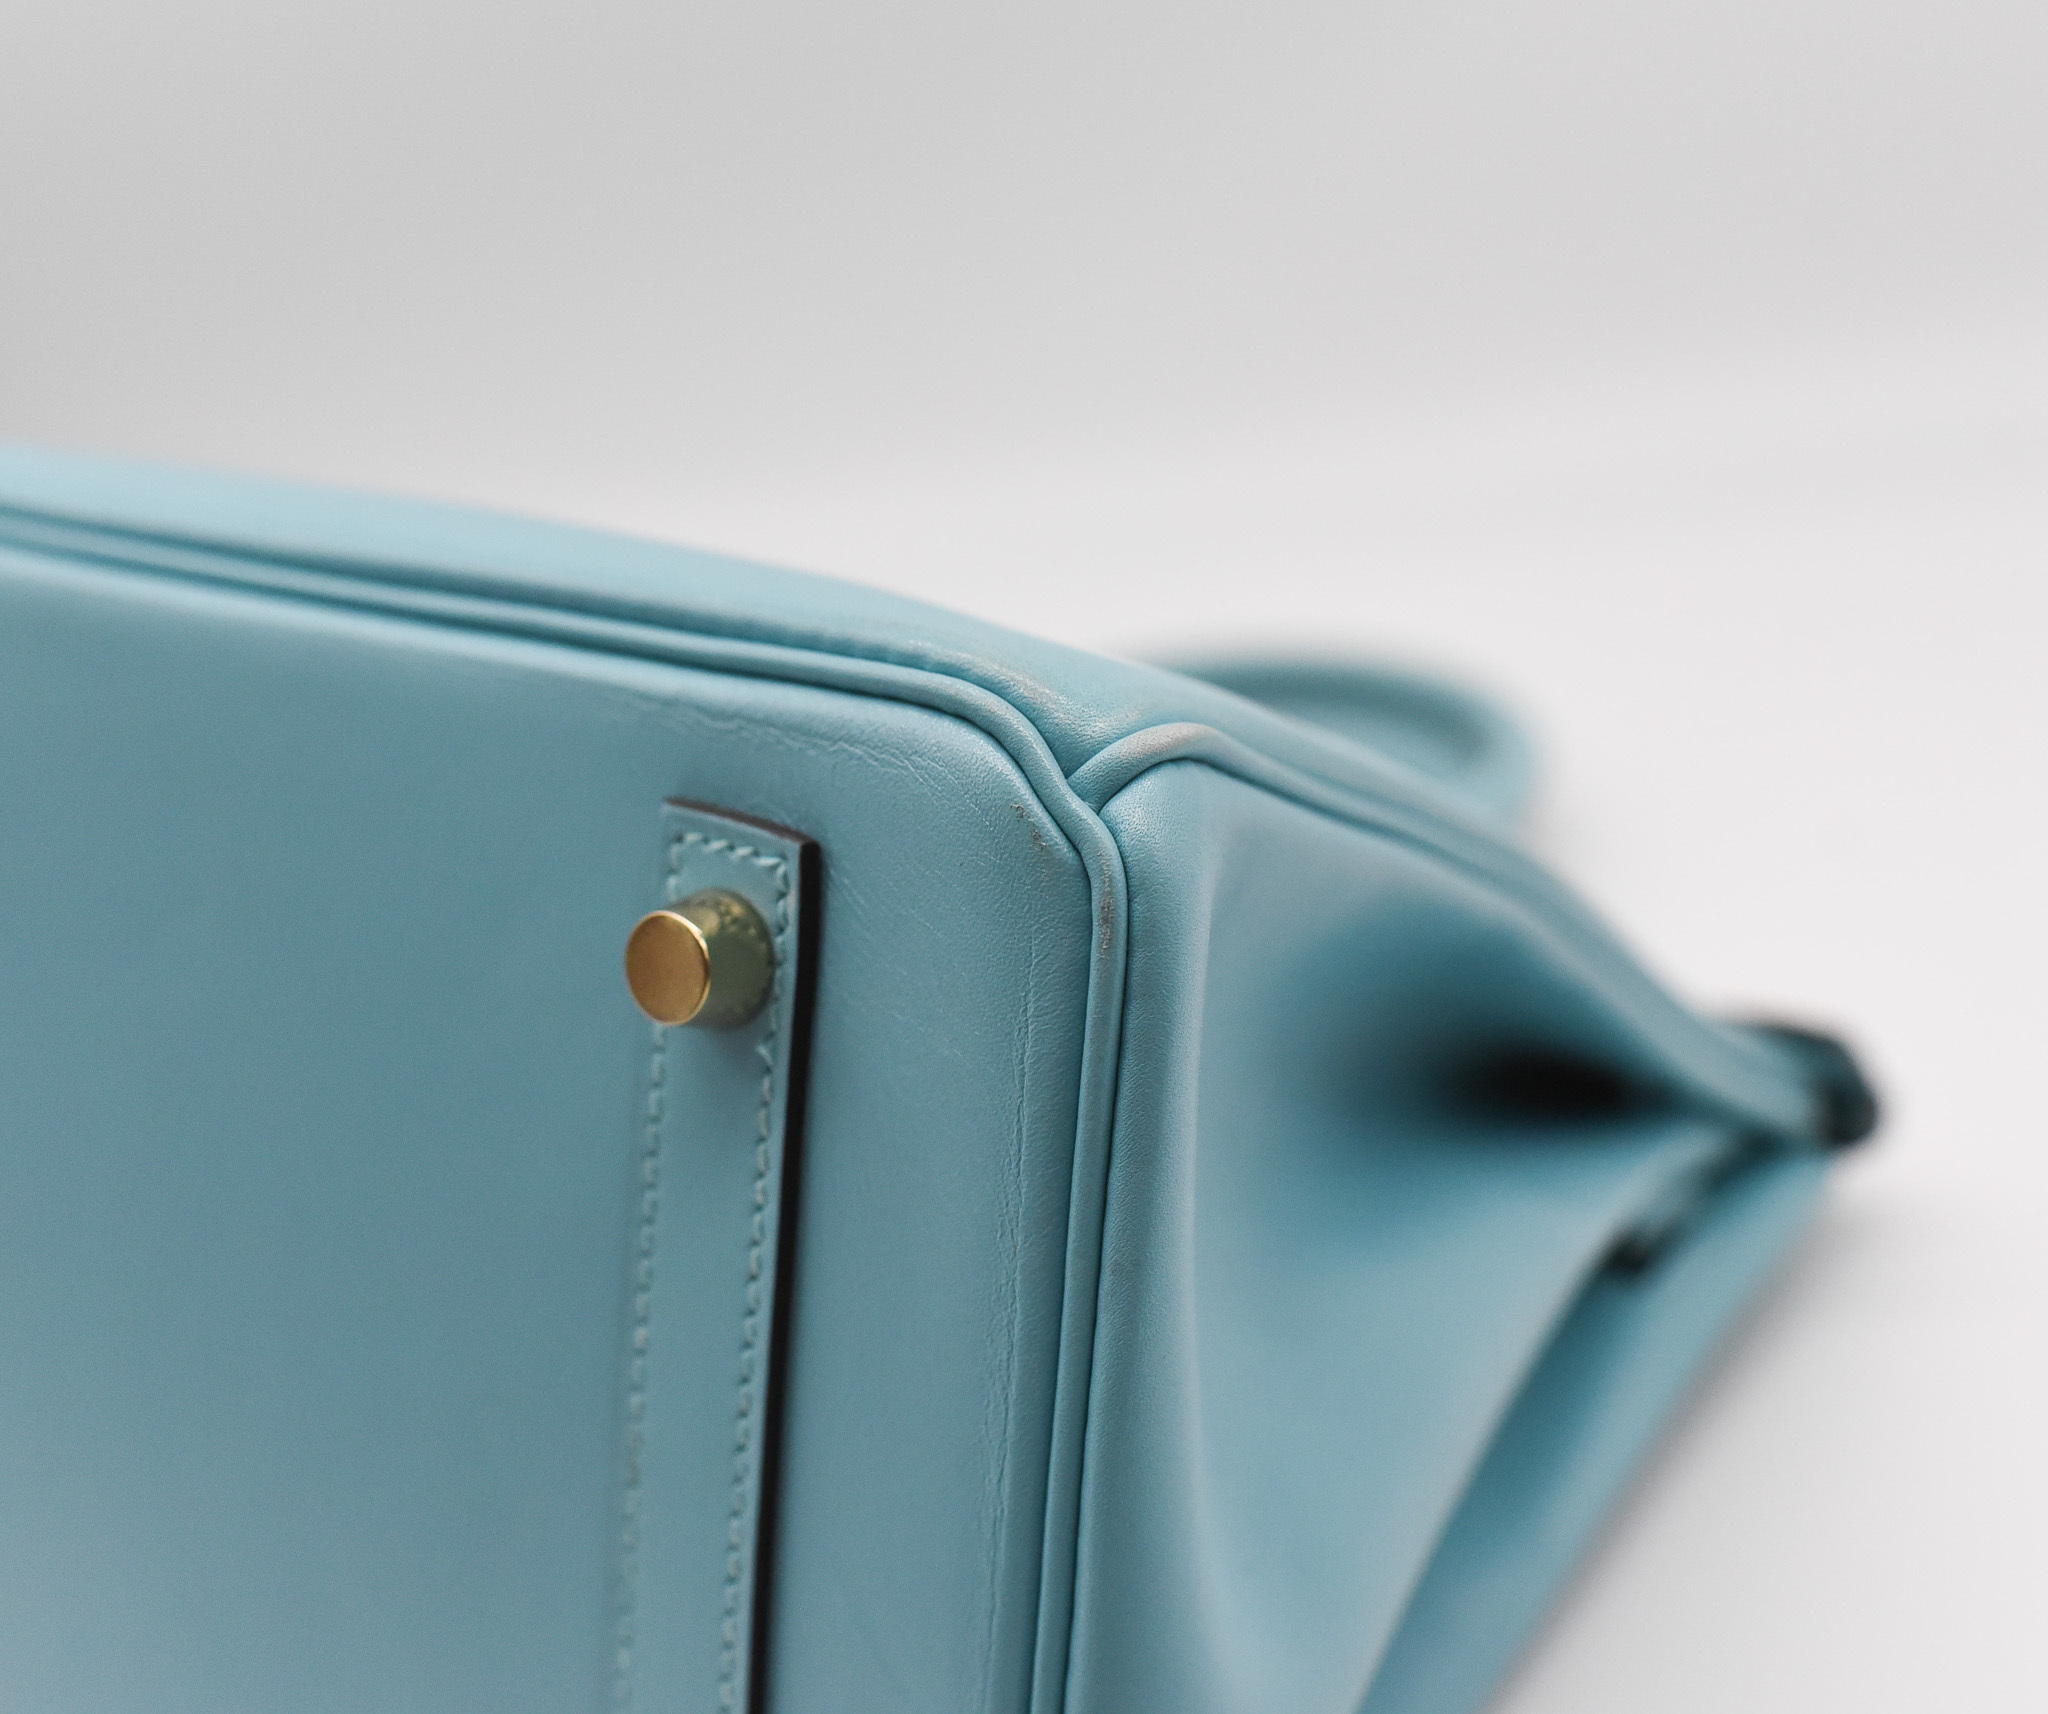 Hermès Birkin 30 Swift Leather Handbag